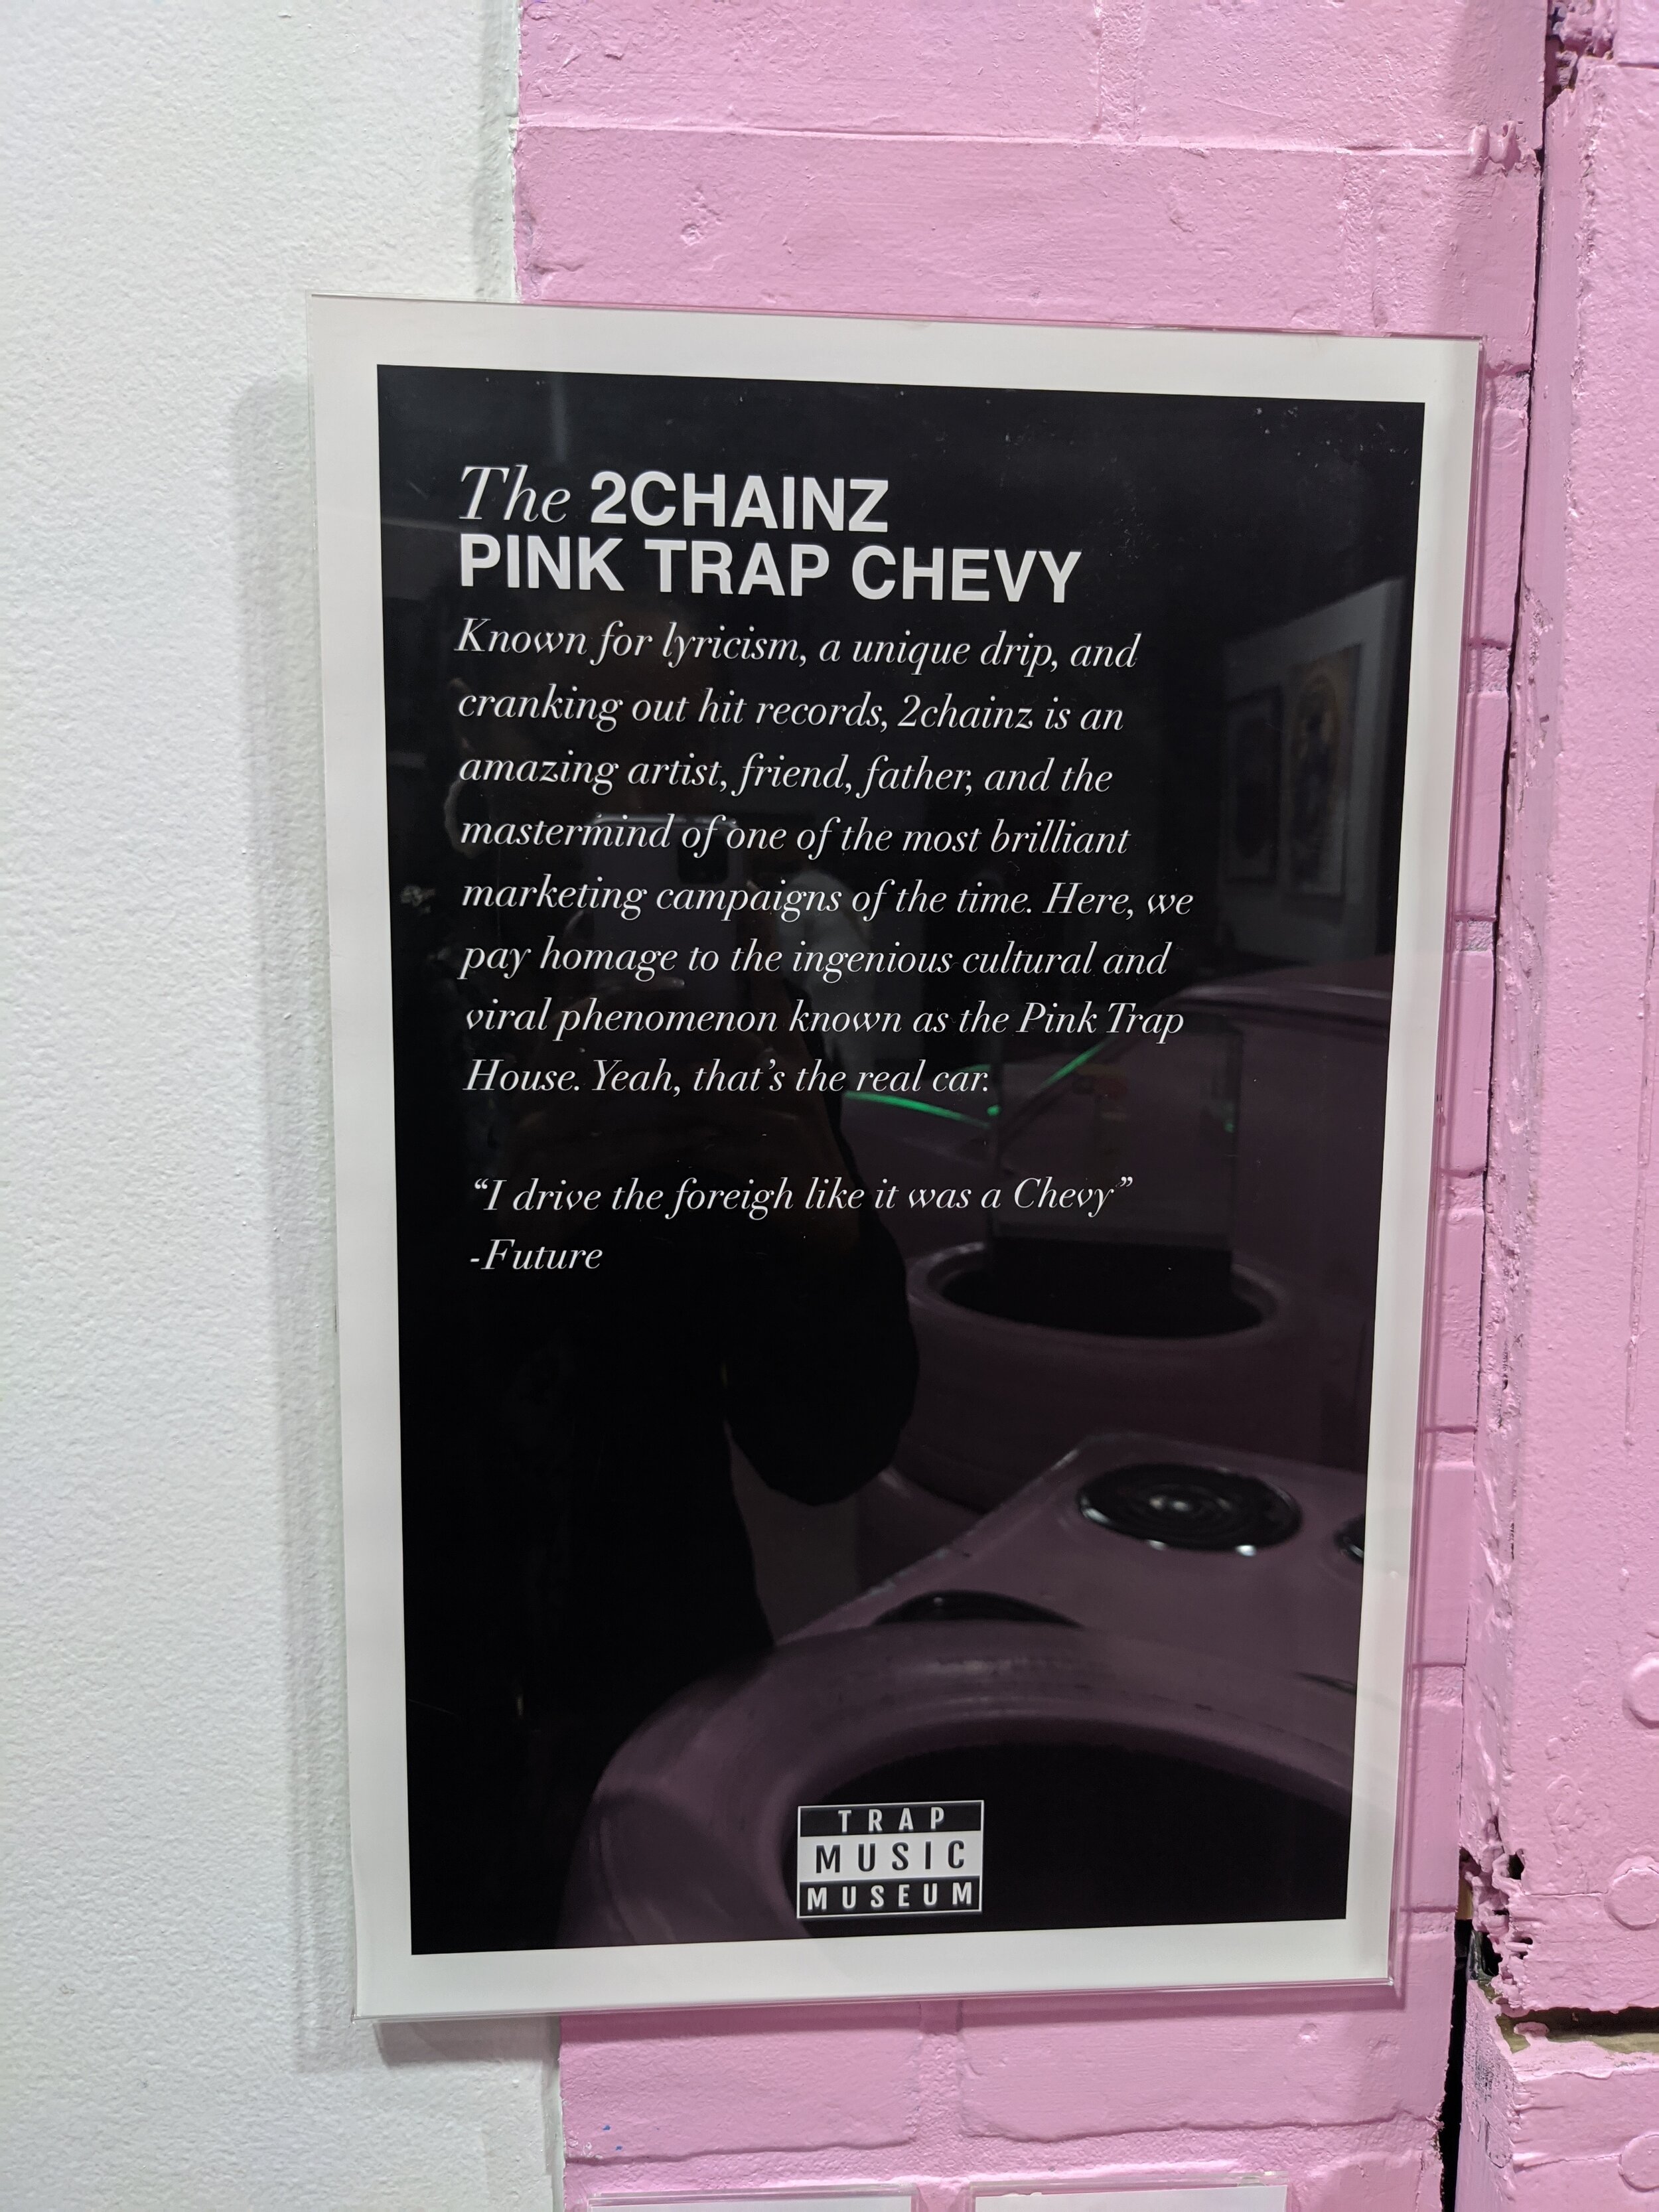 The 2Chainz Pink Trap Chevy Exhibit